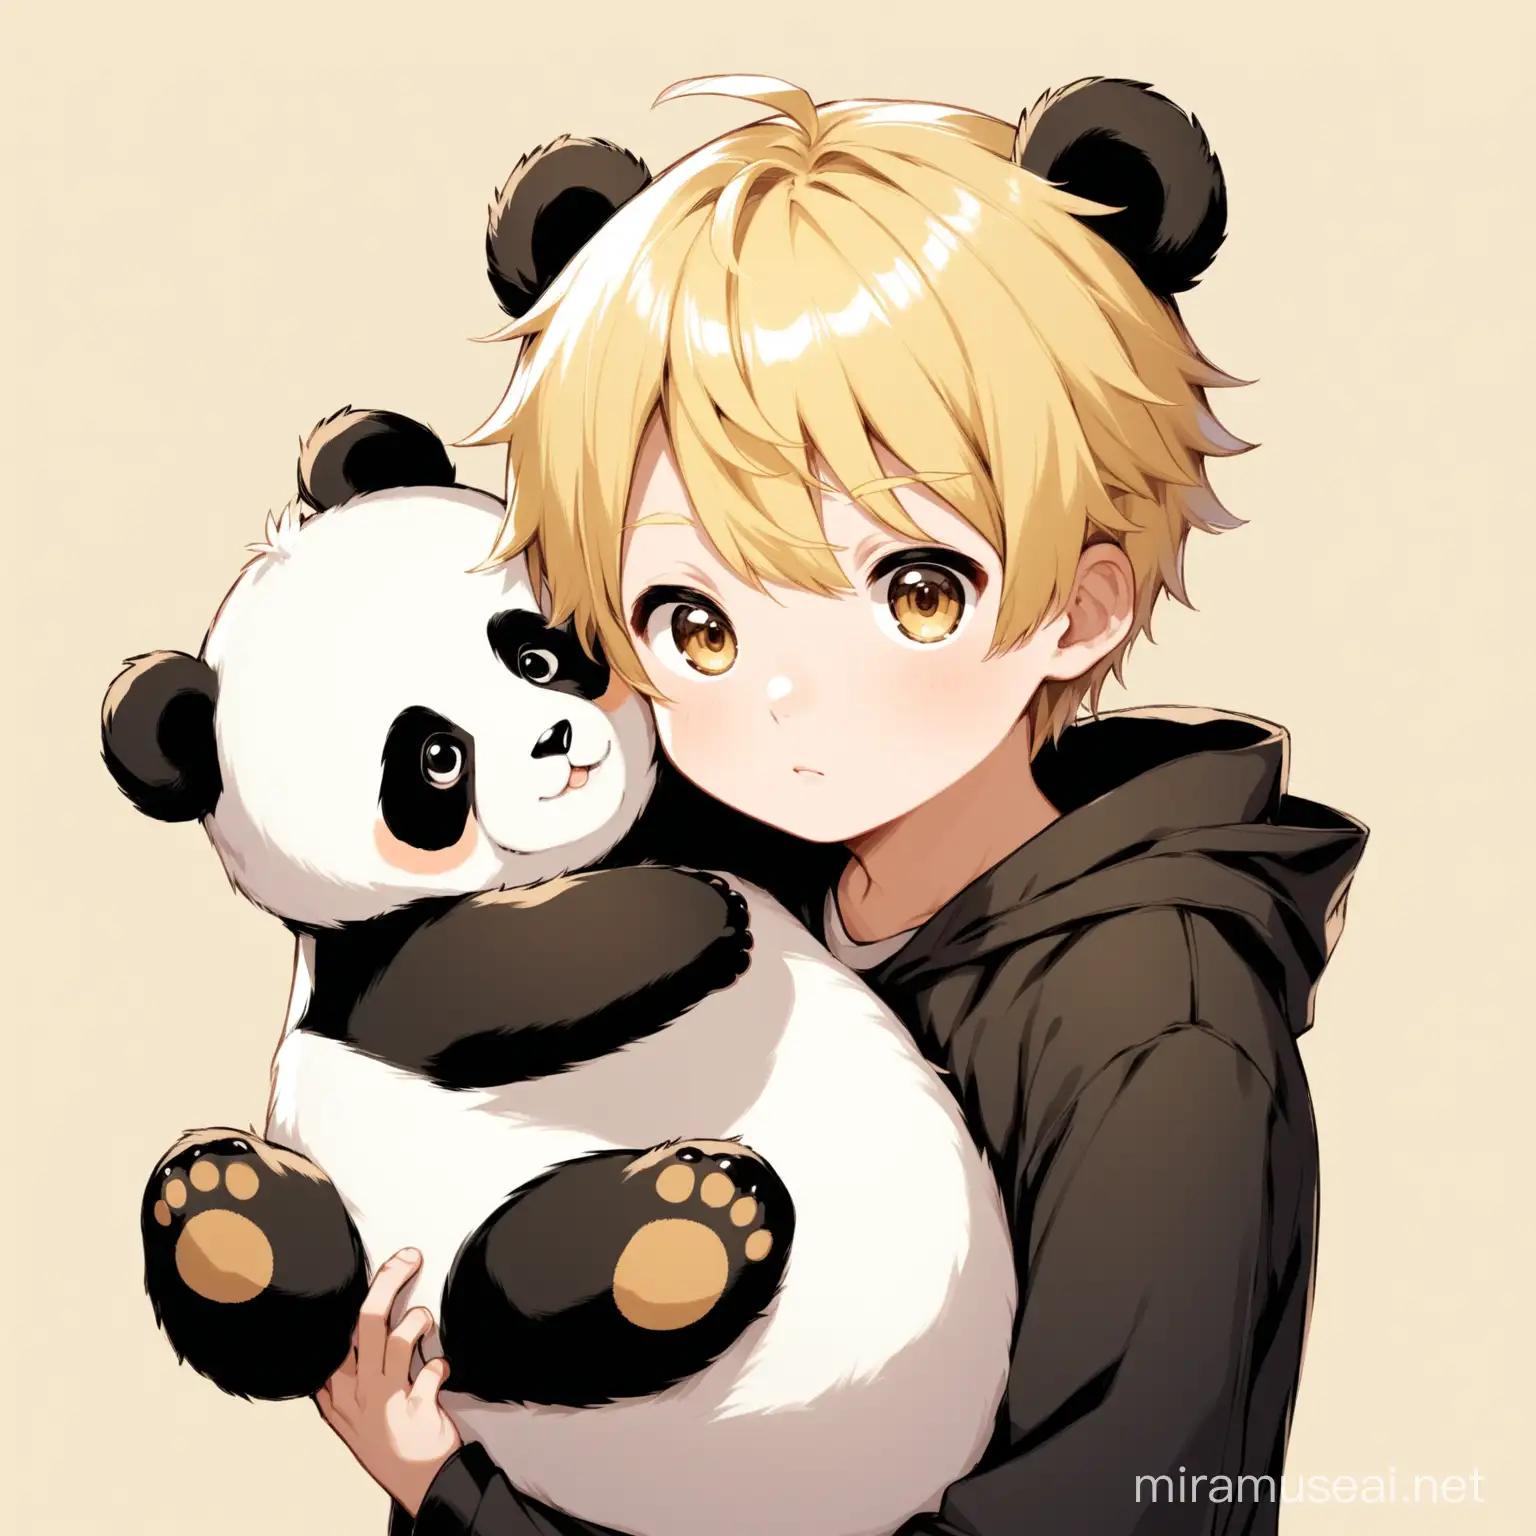 Blond boy with panda bear